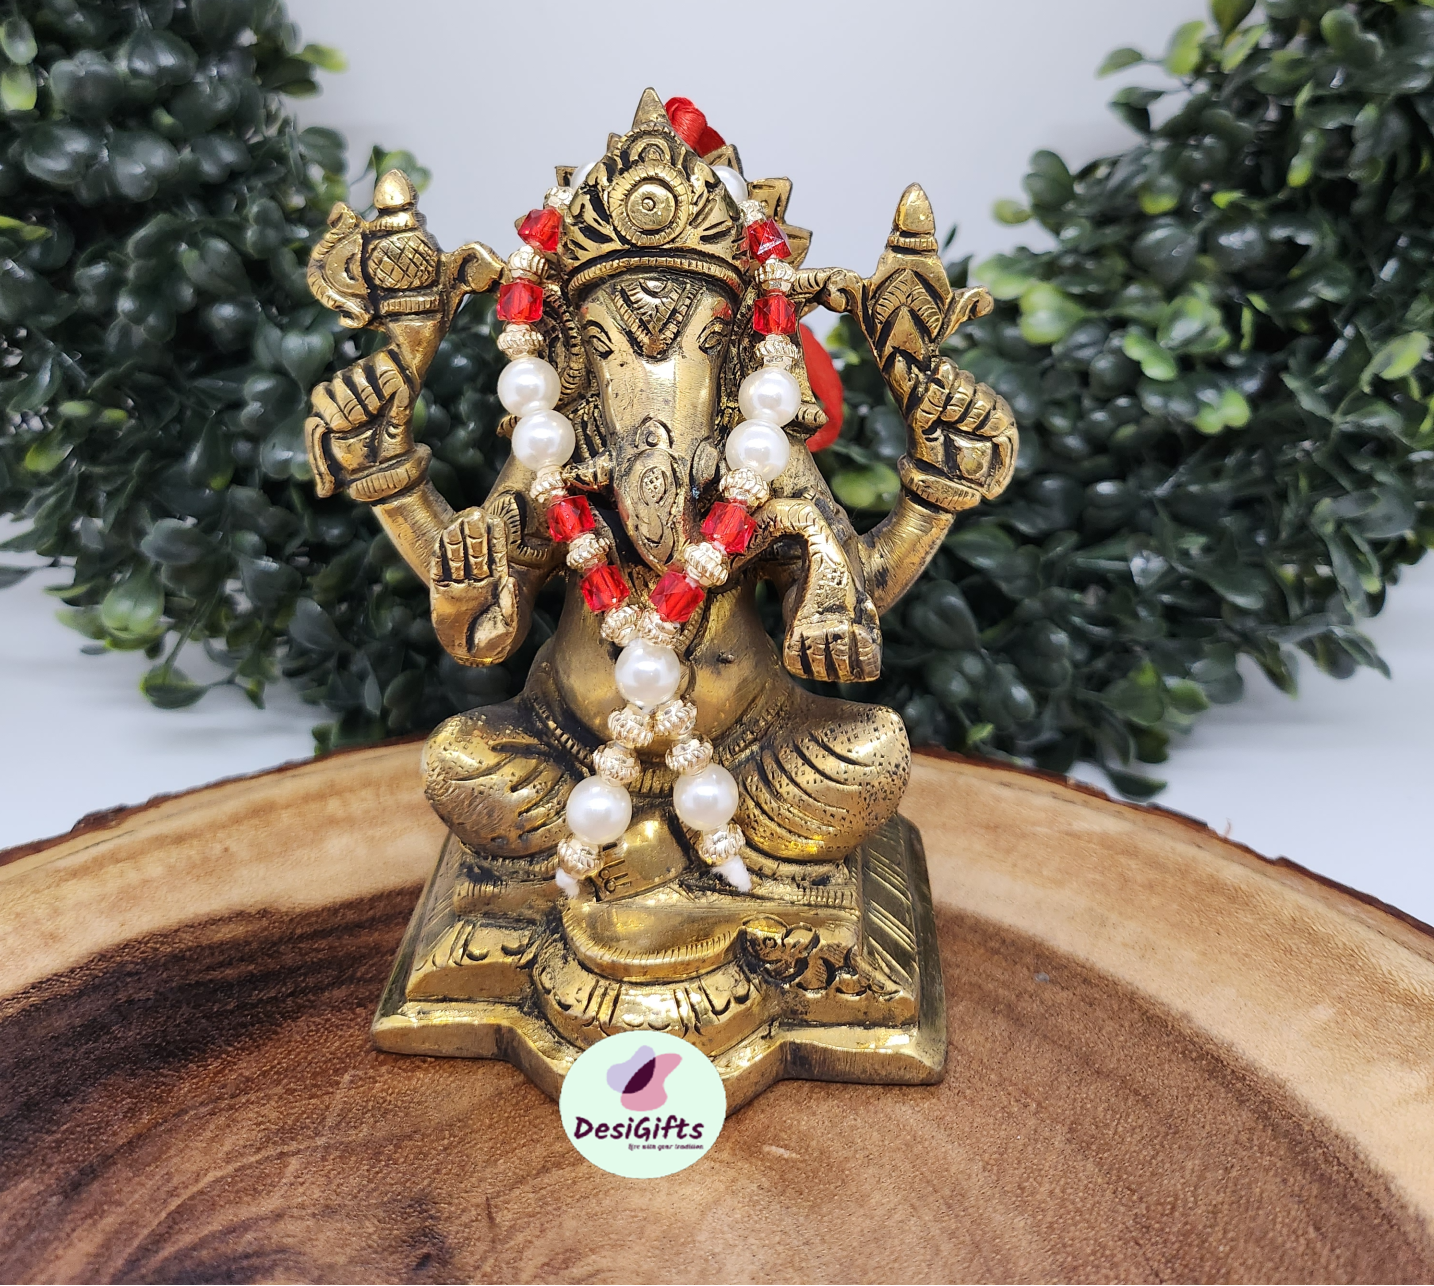 Antique Finish Lord Ganesha Idol- Pure Brass, 4.5", GIB-1091